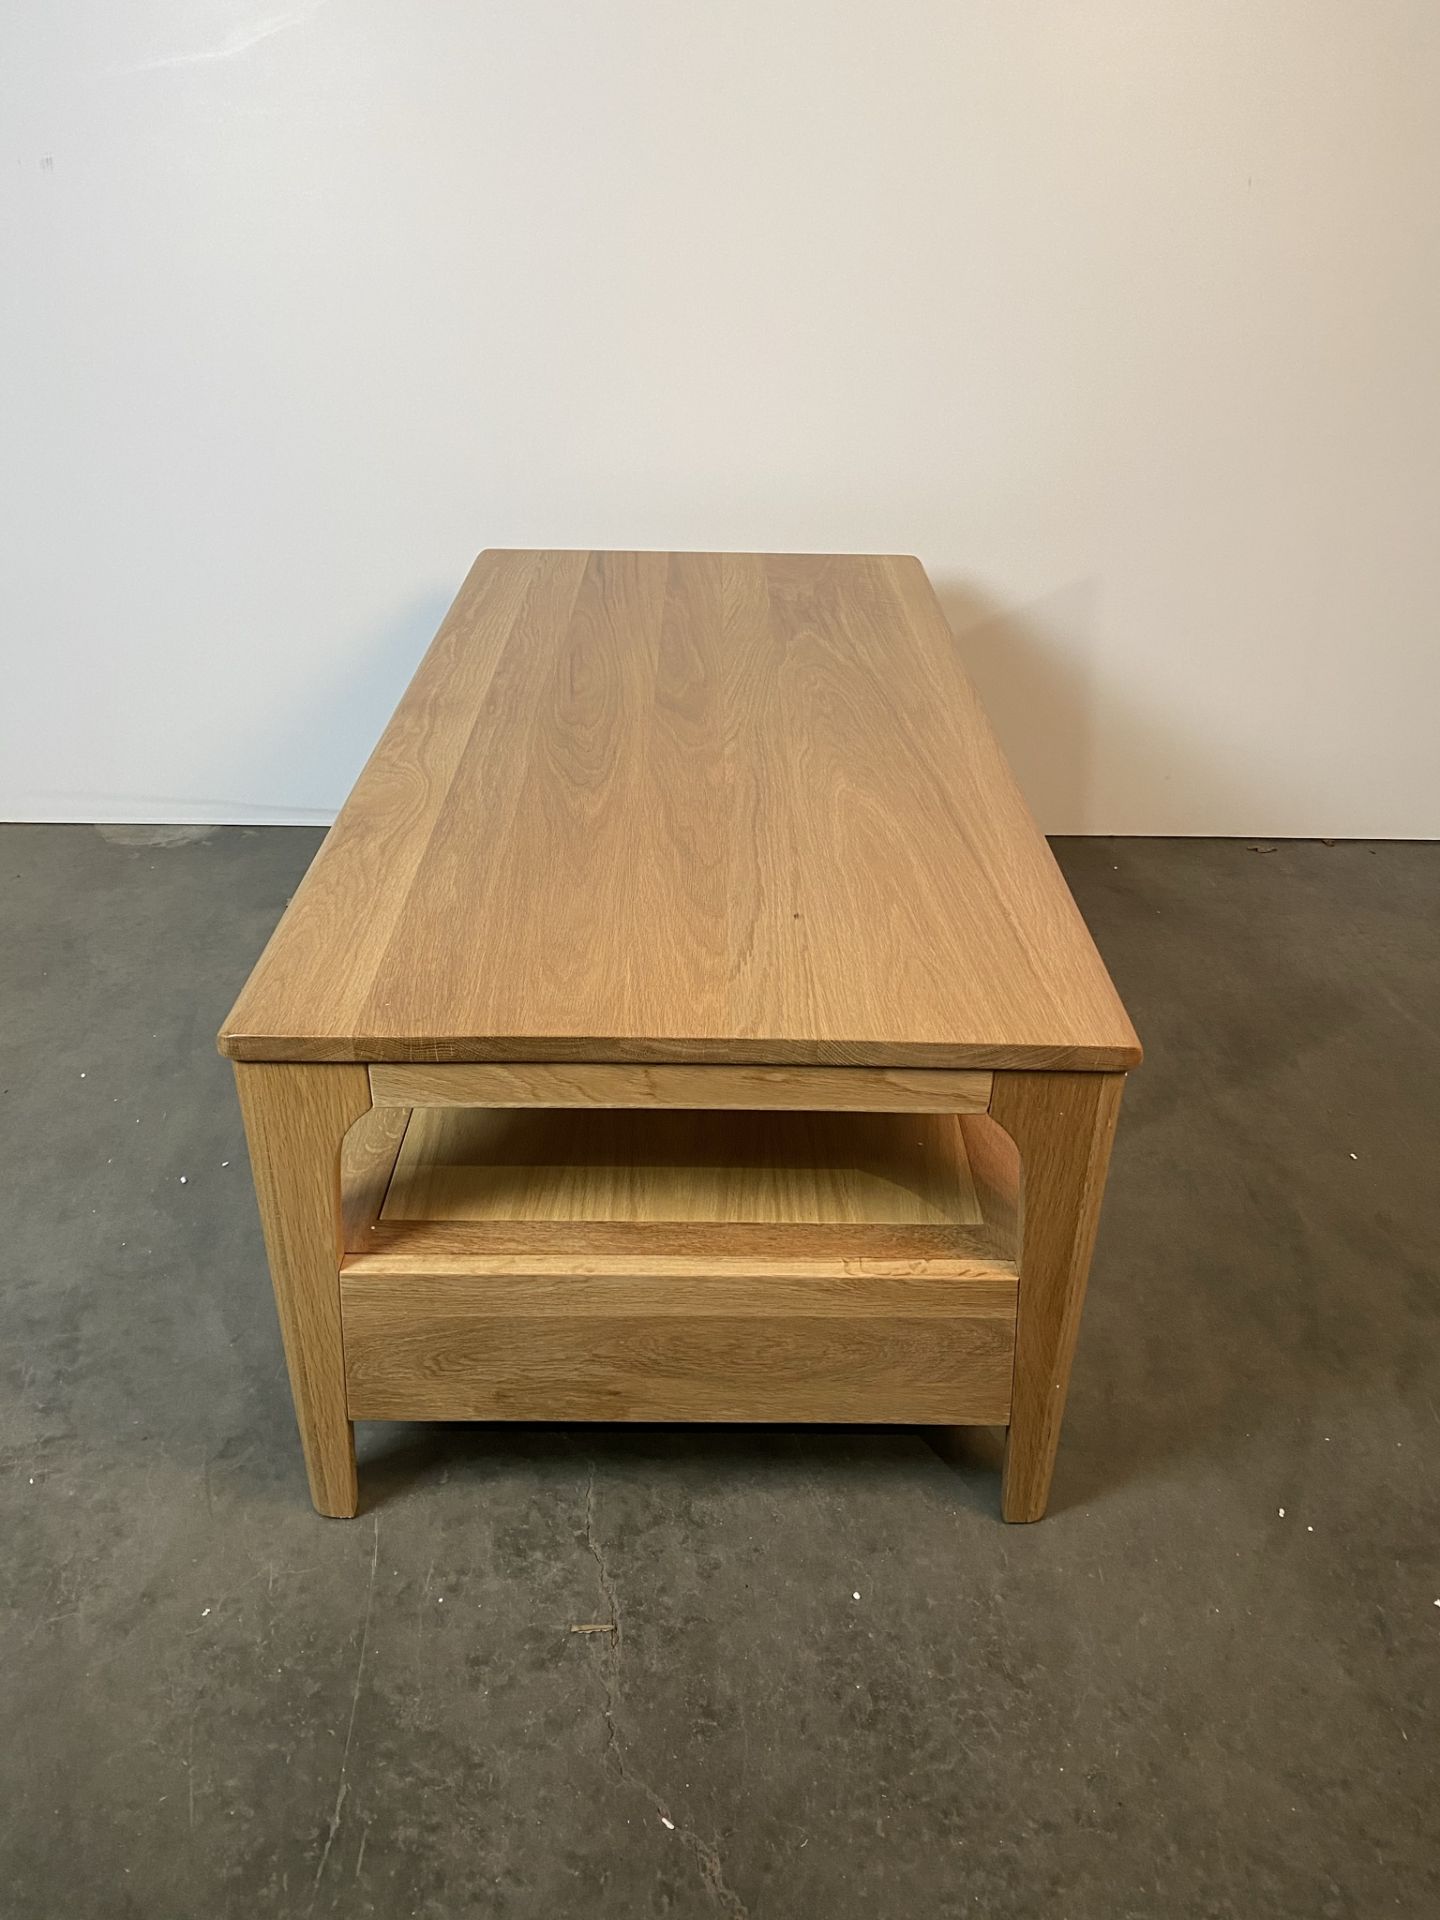 An Solid Oak + Phoenix 4 drawer coffee table - 120cm x 60cm x 45 cm - Image 5 of 10